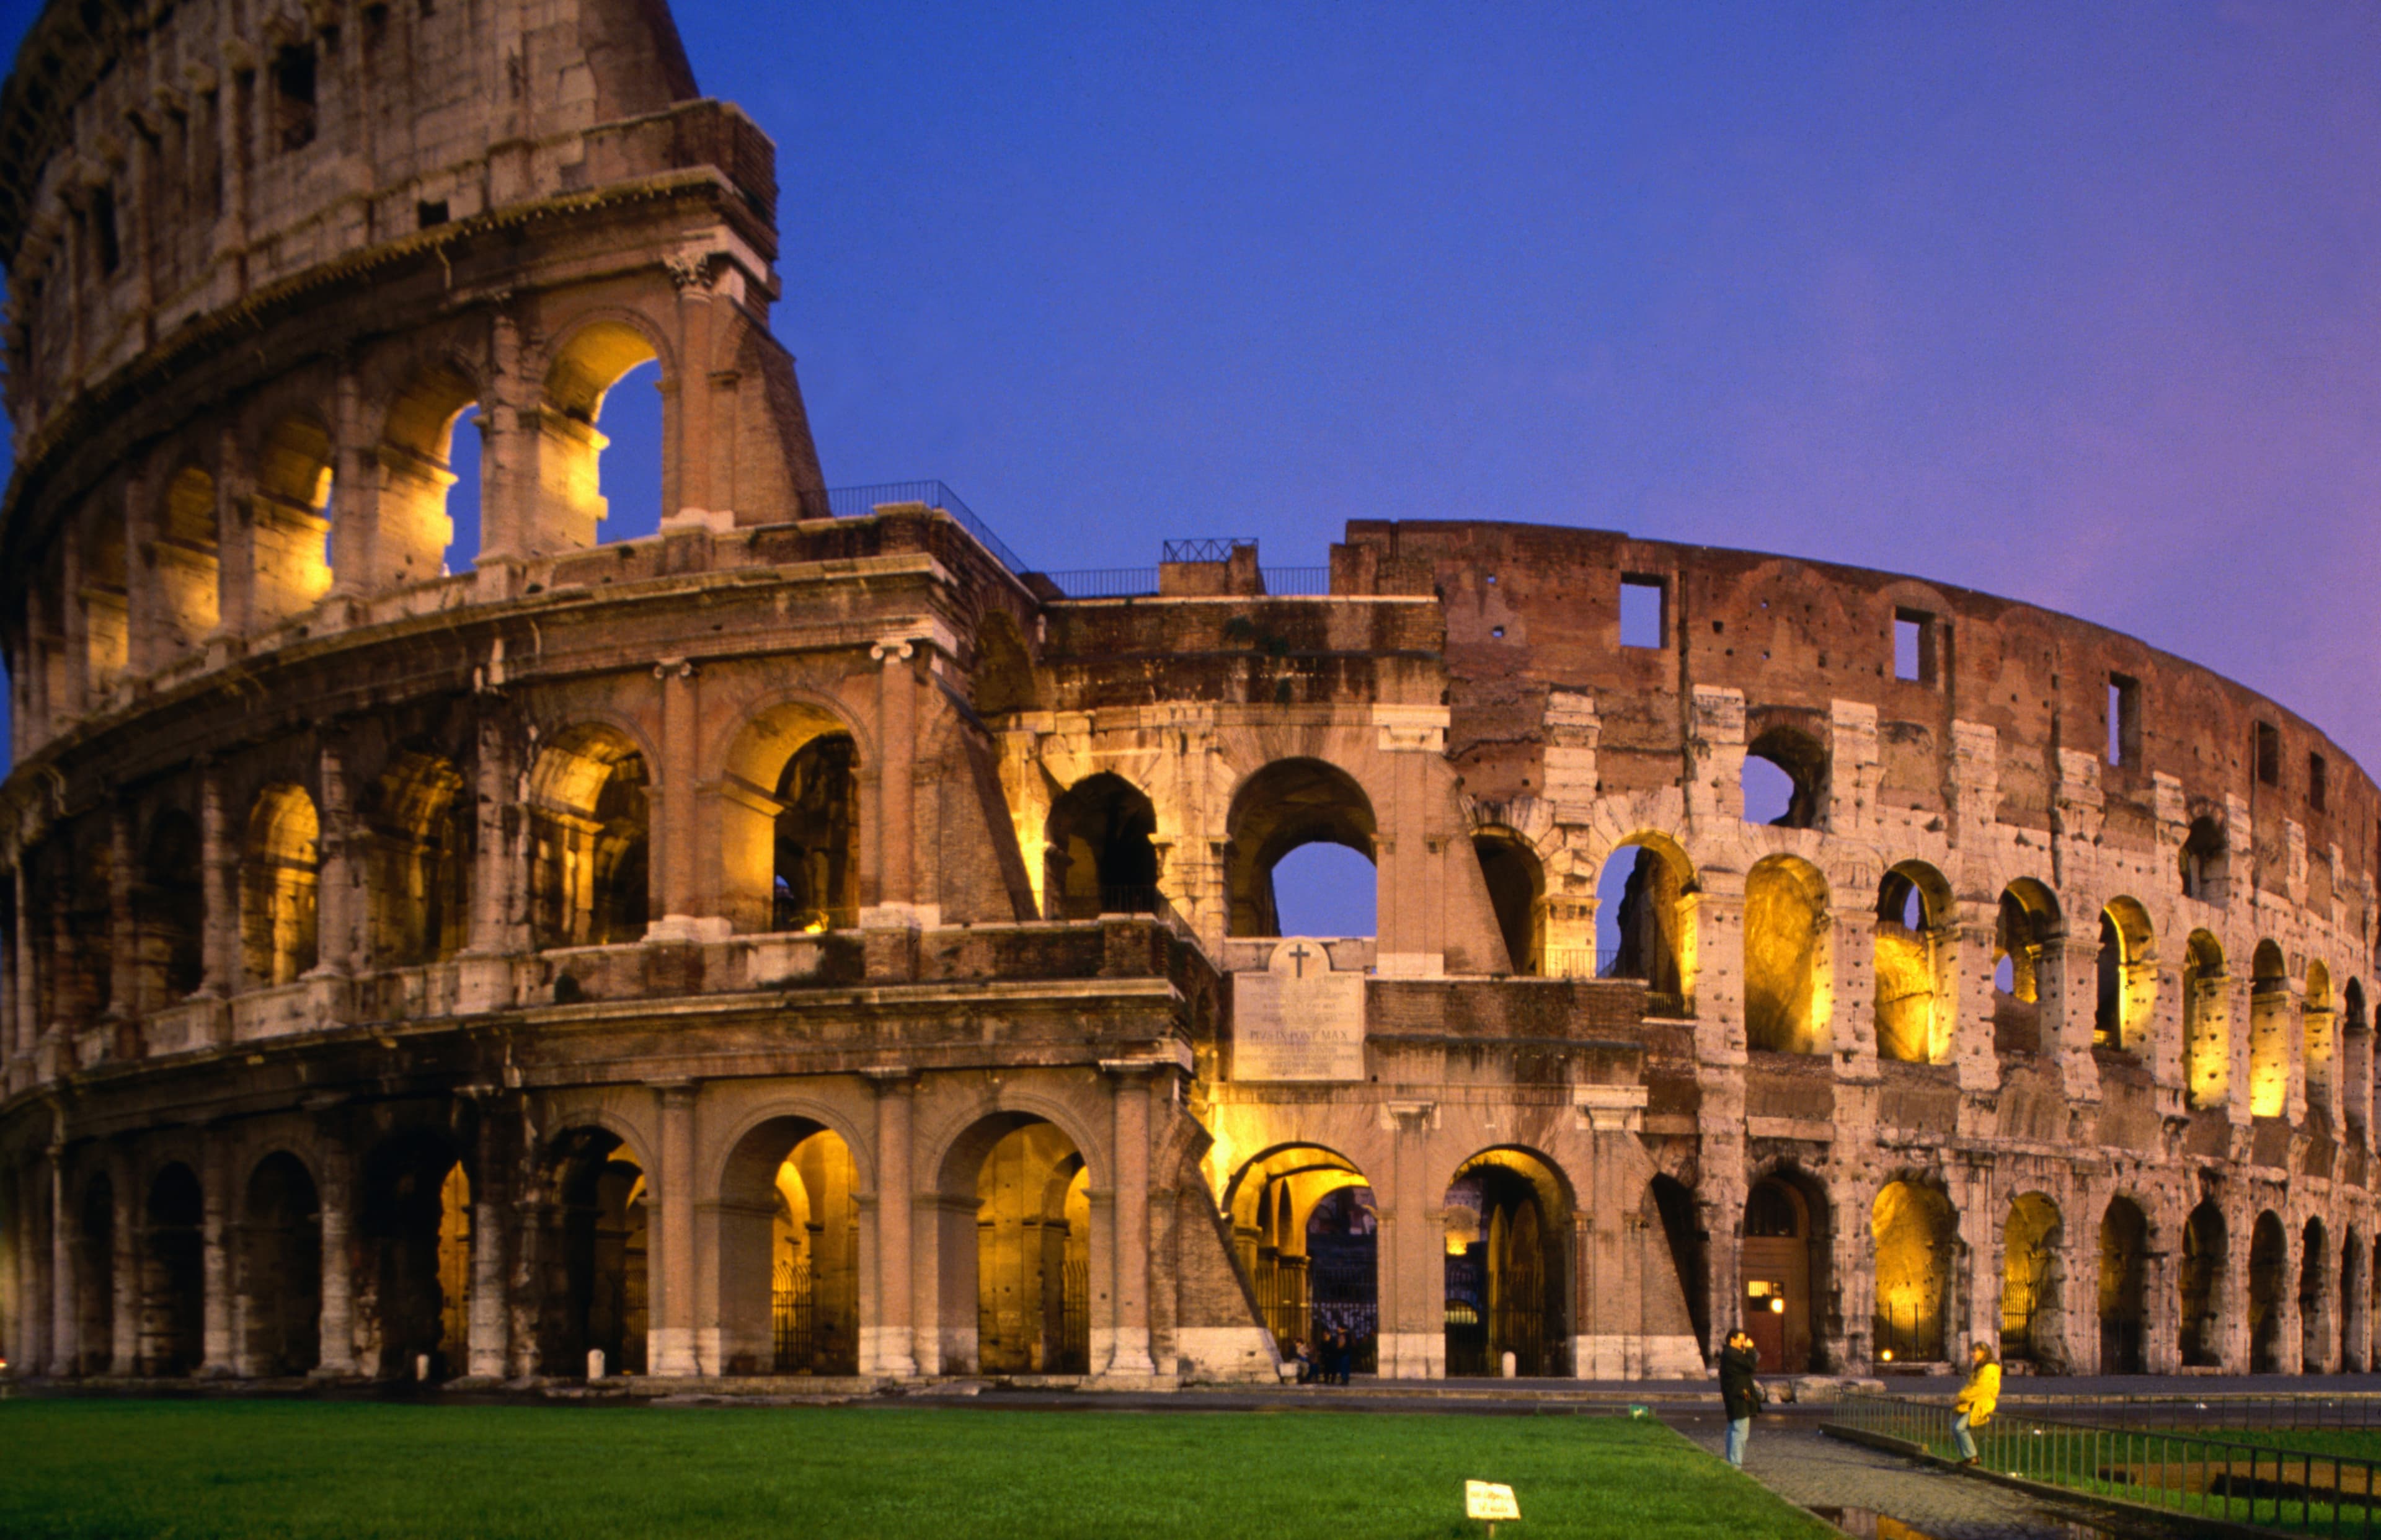 Colosseum at night.